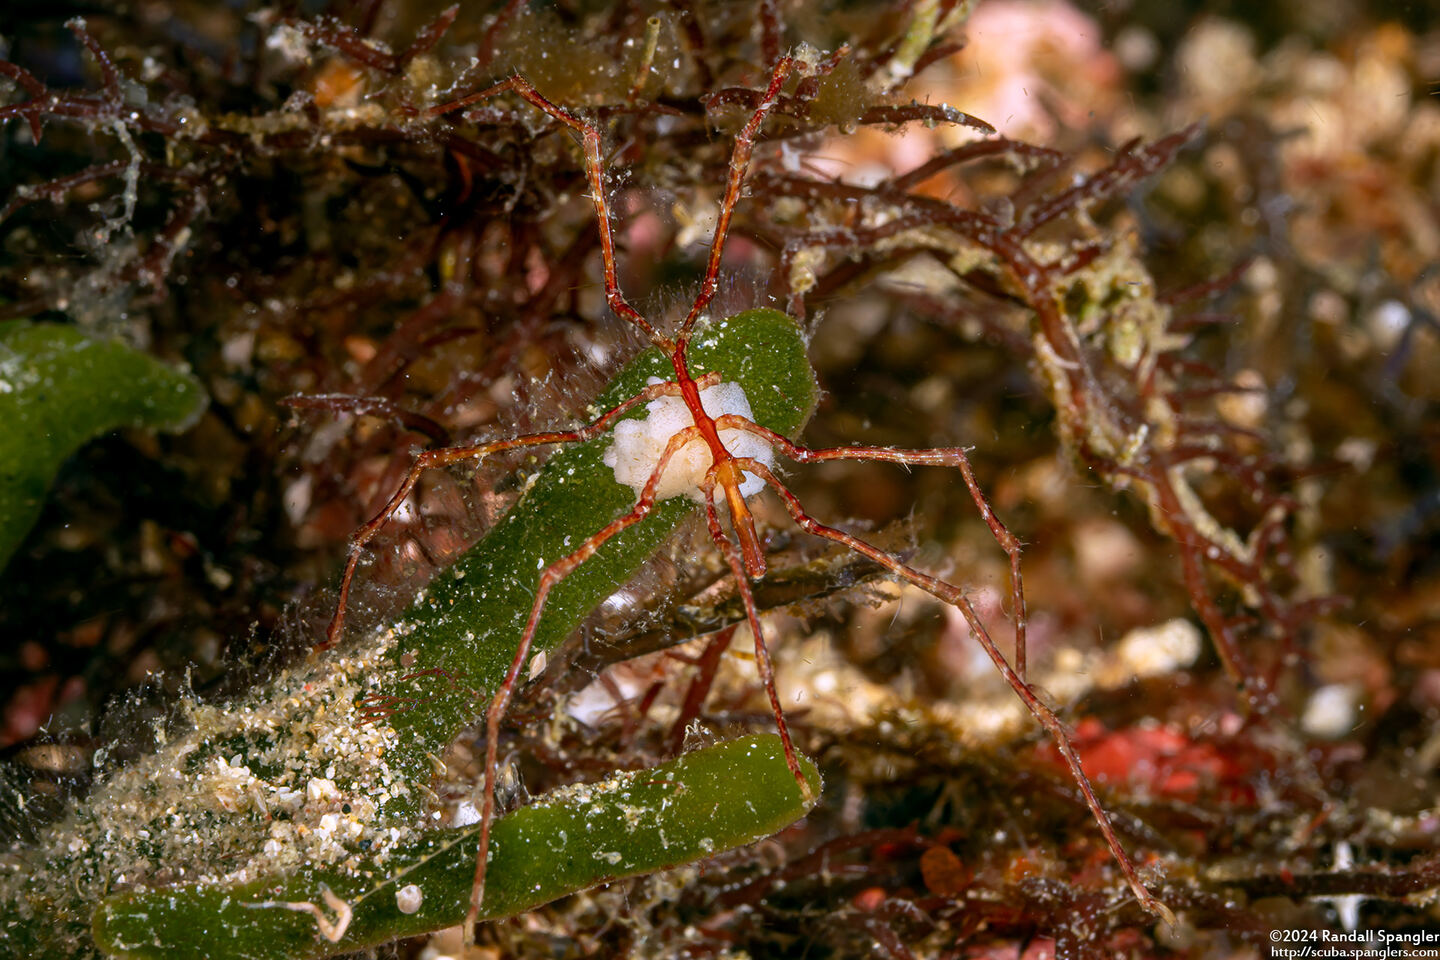 Class Pycnogonida (Sea Spider); Carrying eggs